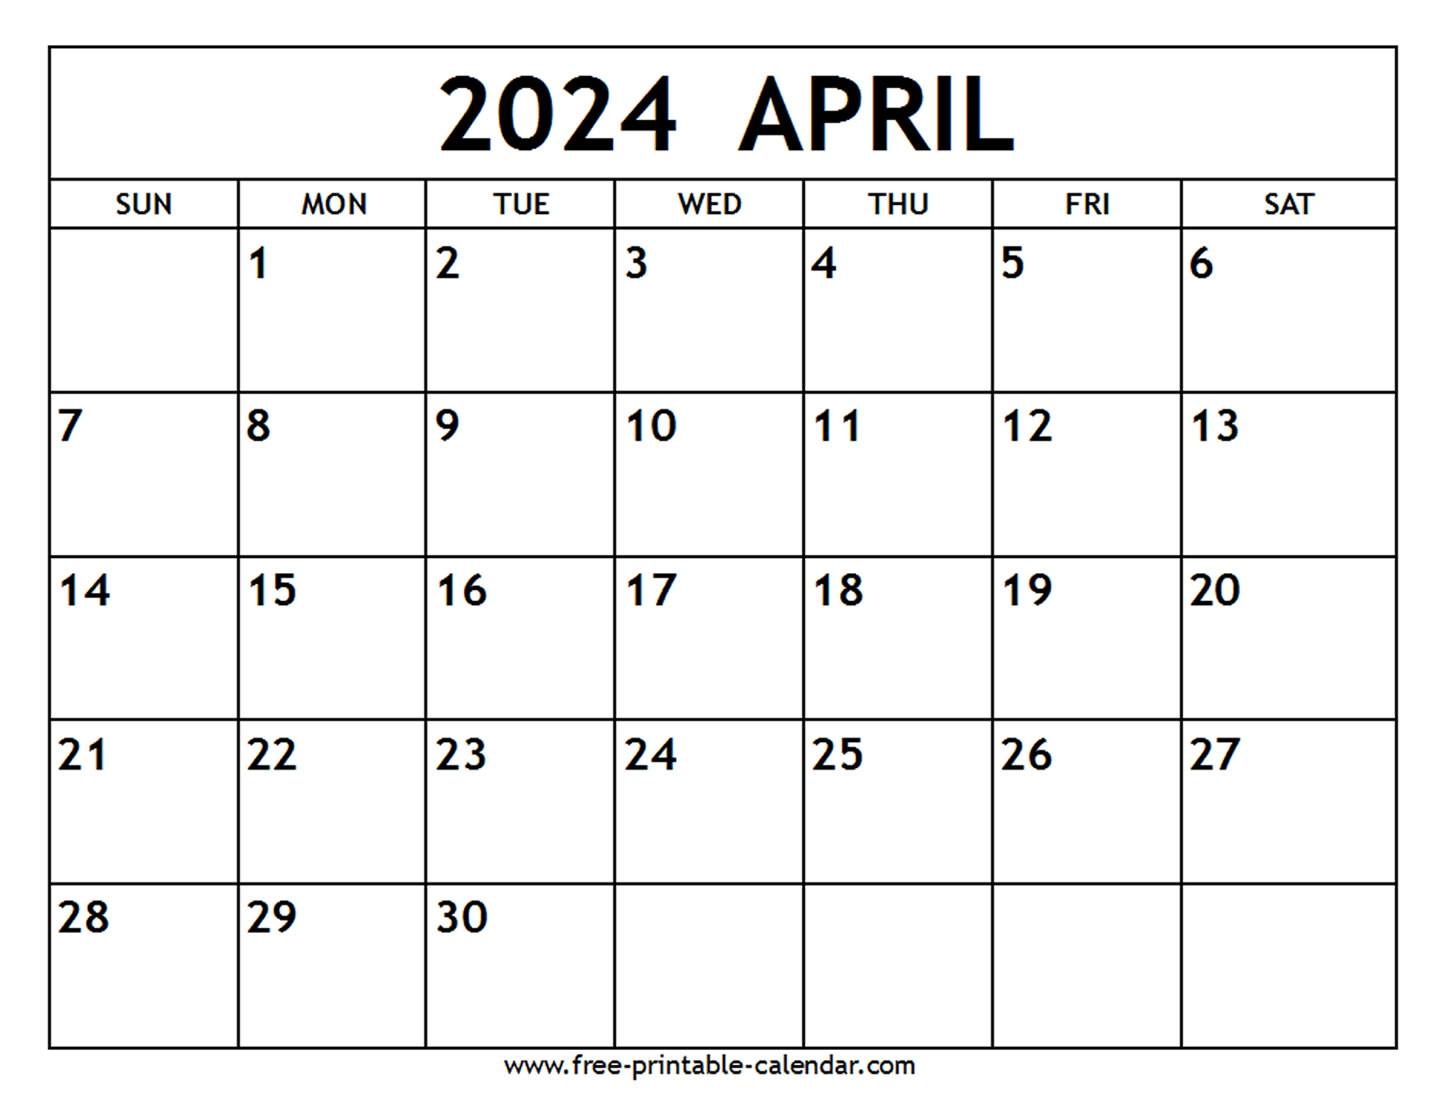 April 2024 Calendar - Free-Printable-Calendar intended for Free Printable Calendar 2024 April